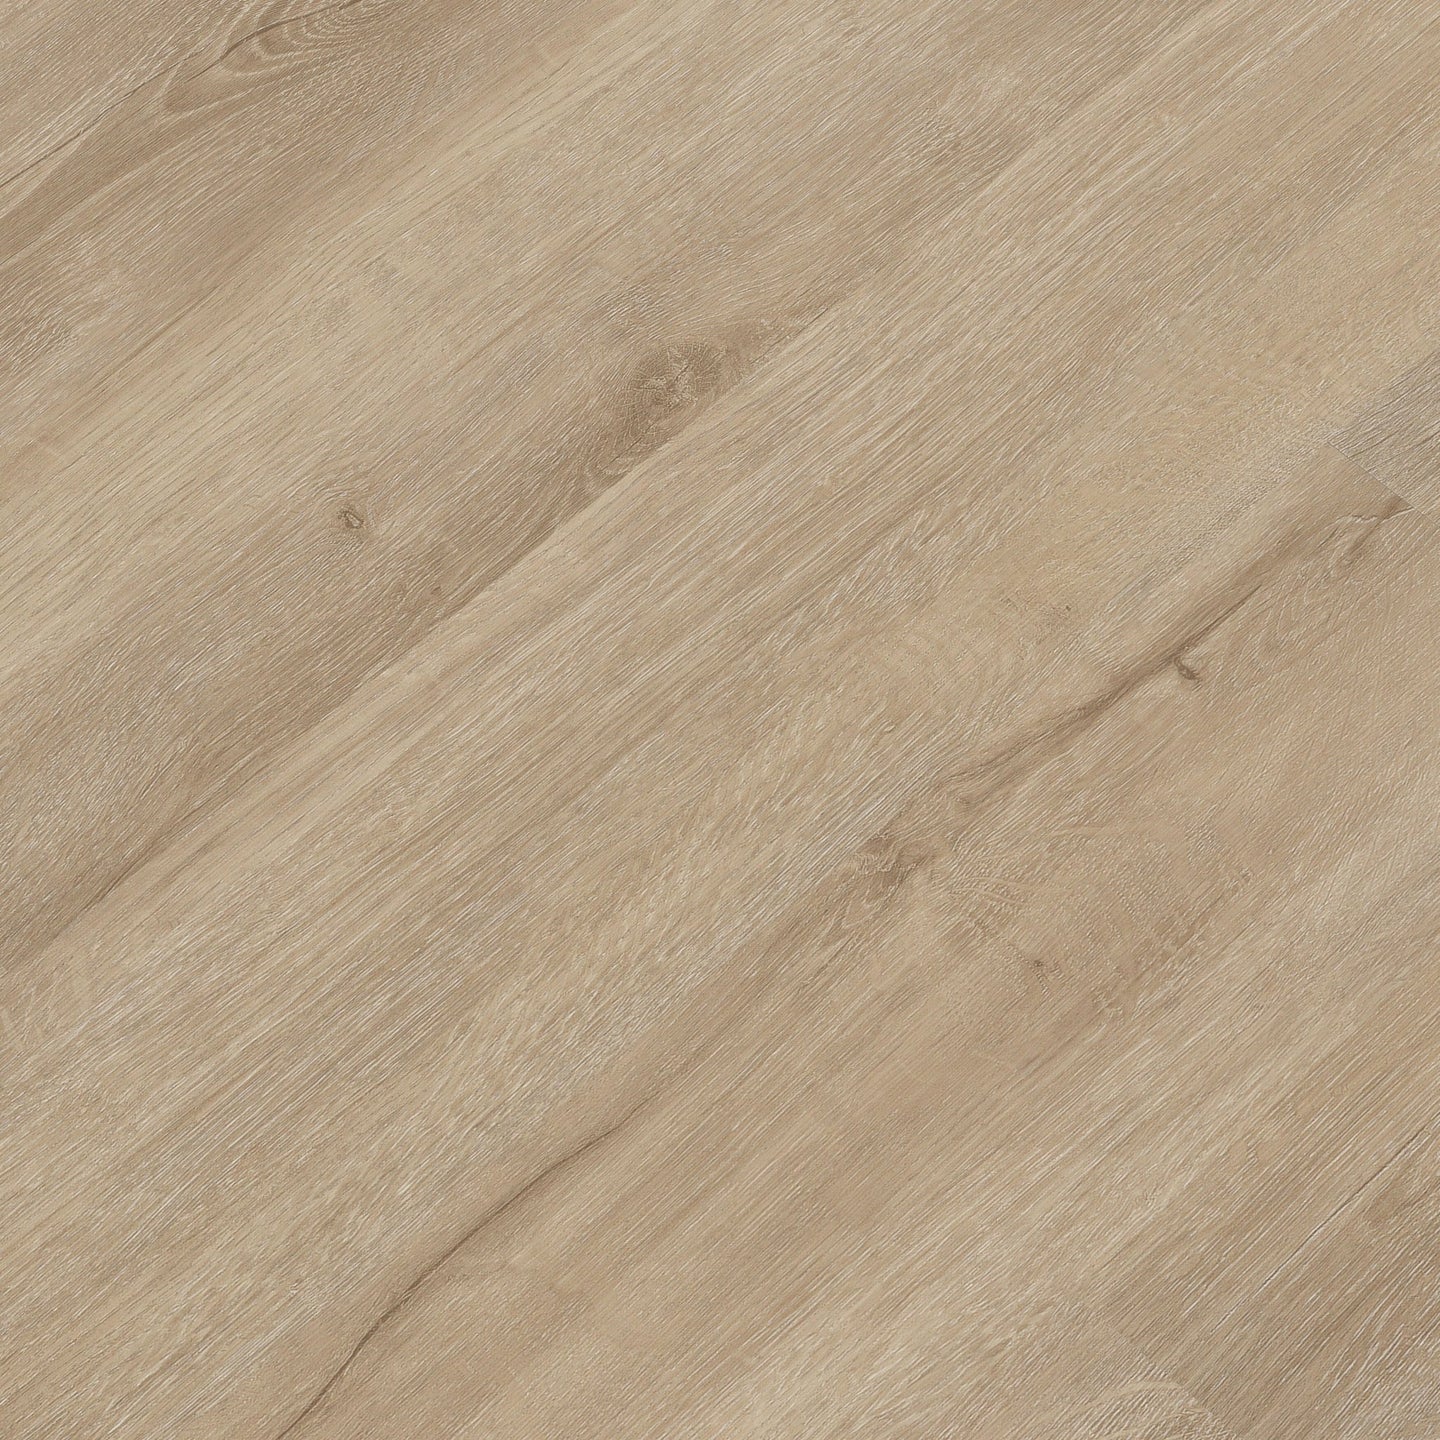 Cyrus Sandino MSI Luxury Vinyl Plank Flooring - Luxury Vinyl Flooring For Less